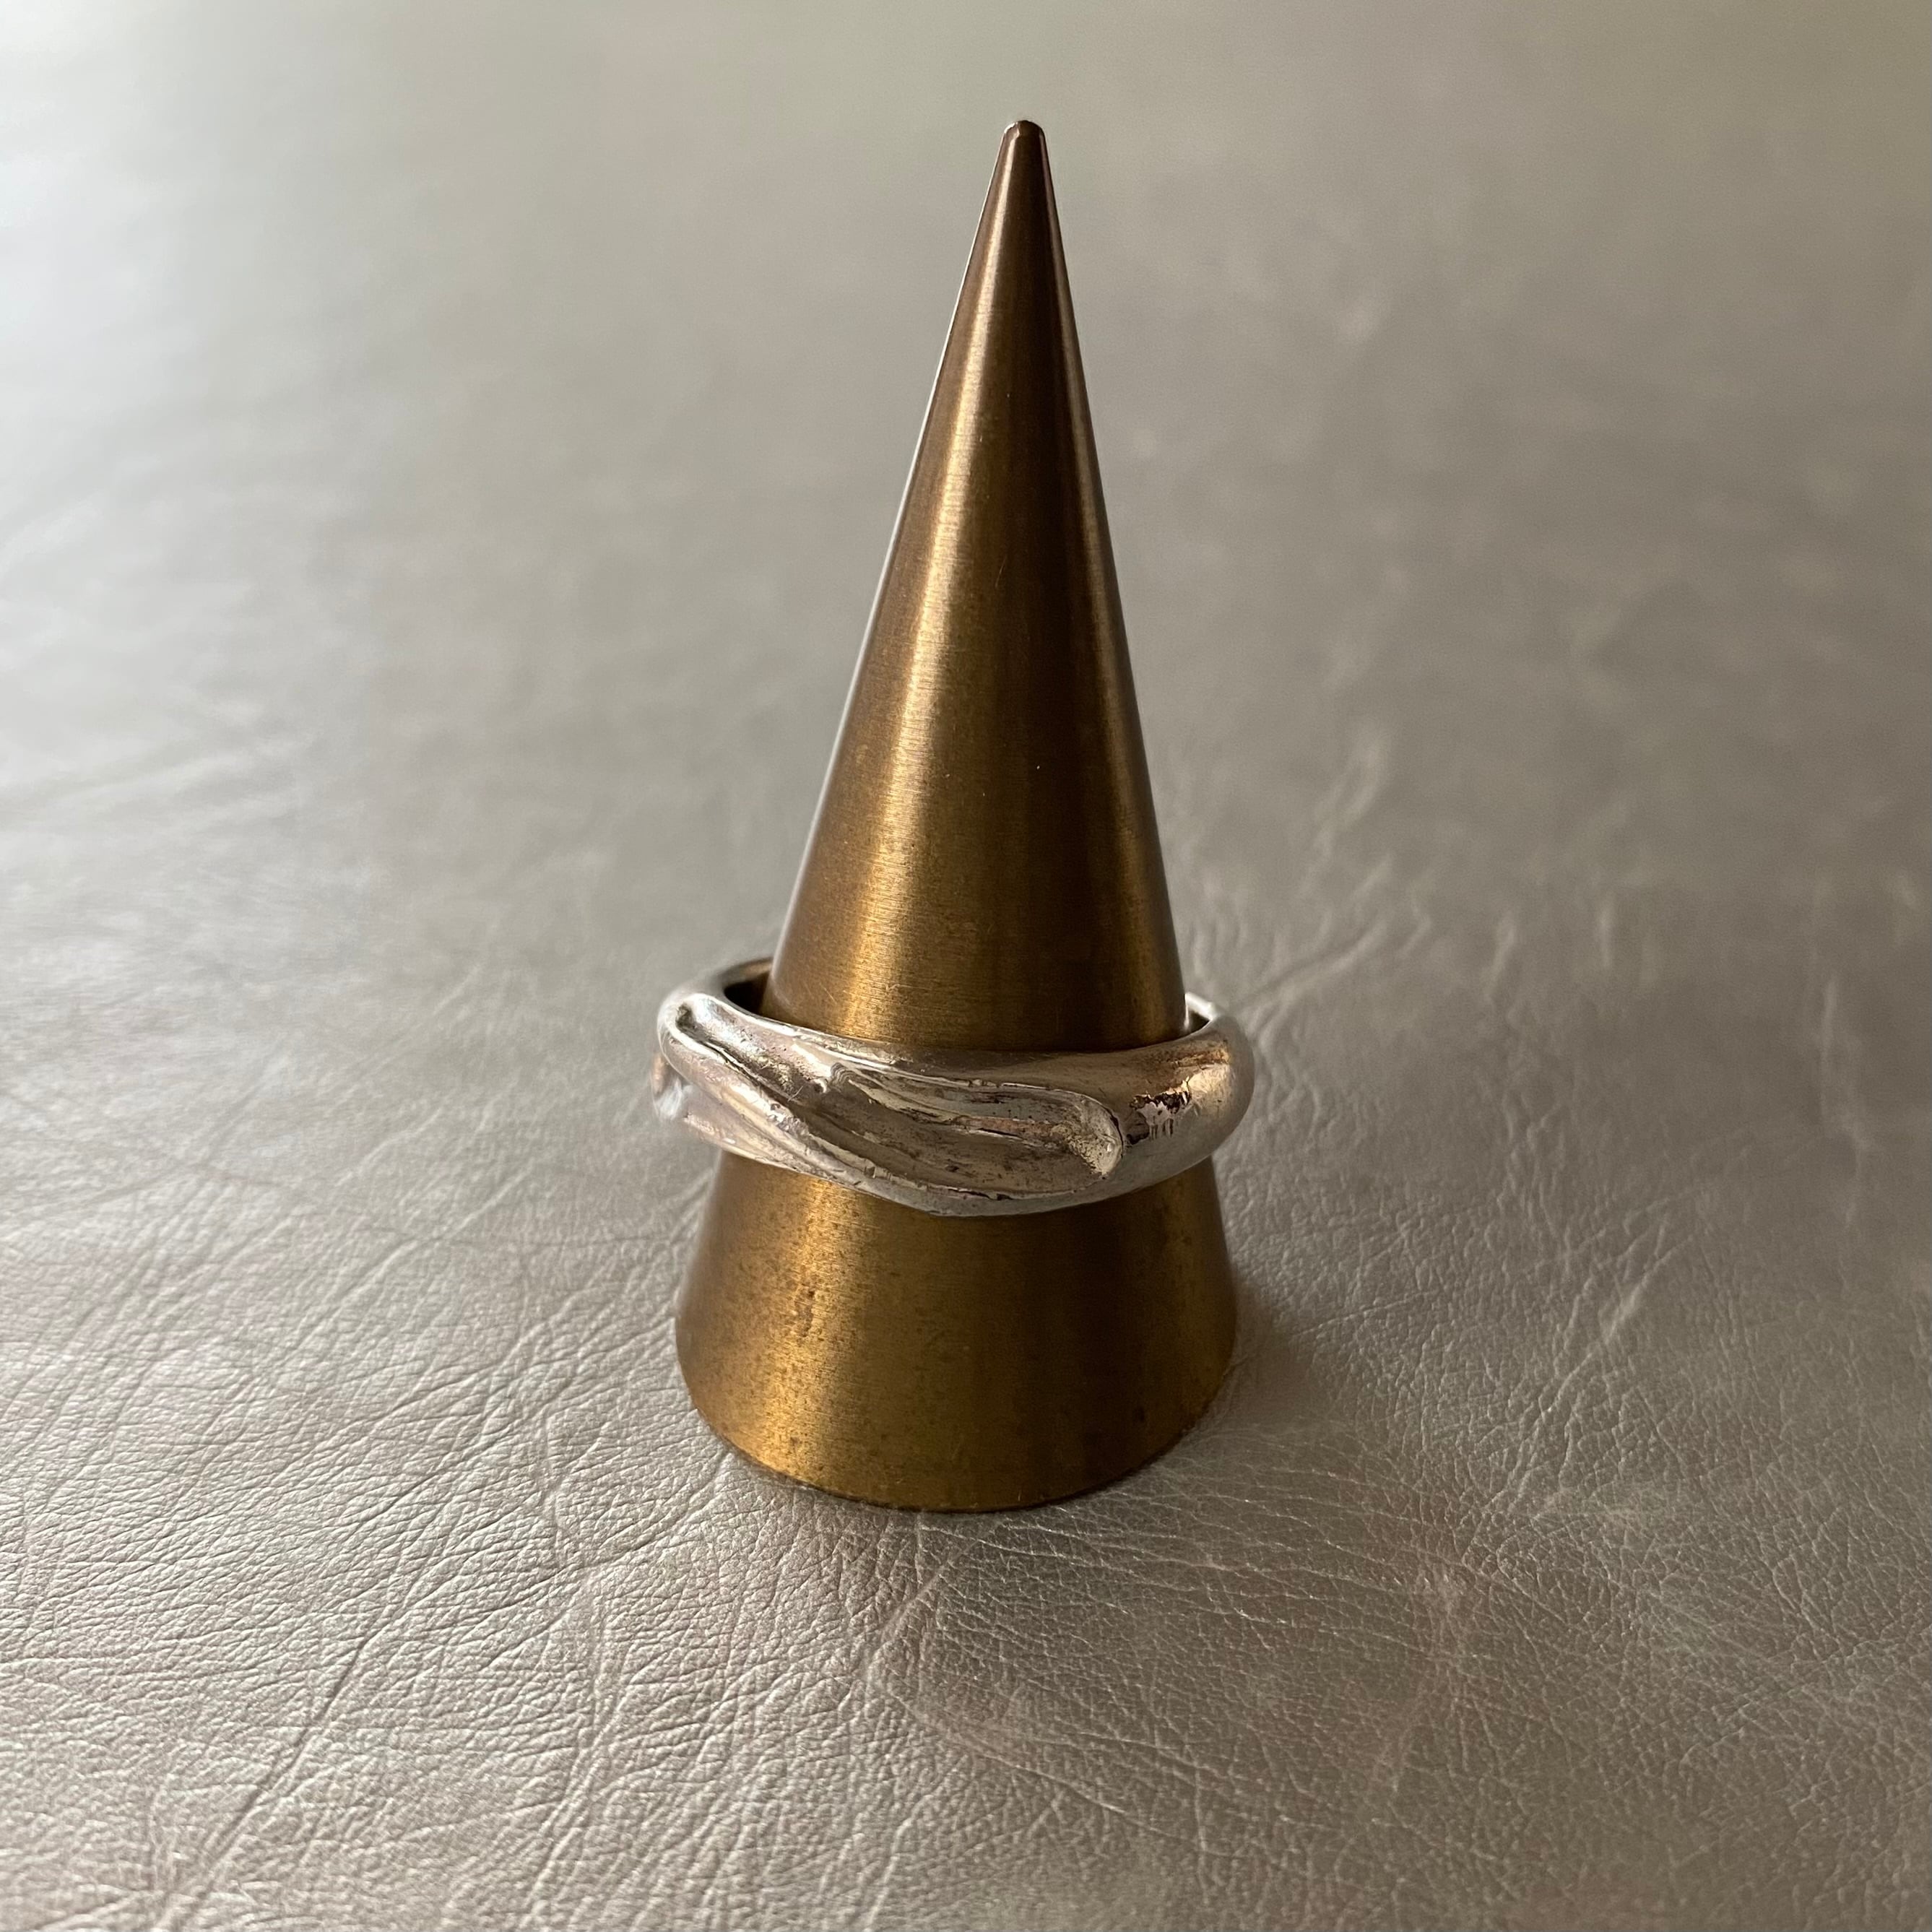 Used silver 925 artistic design ring ユーズド シルバー 925 アーティスティック デザイン メンズ リング